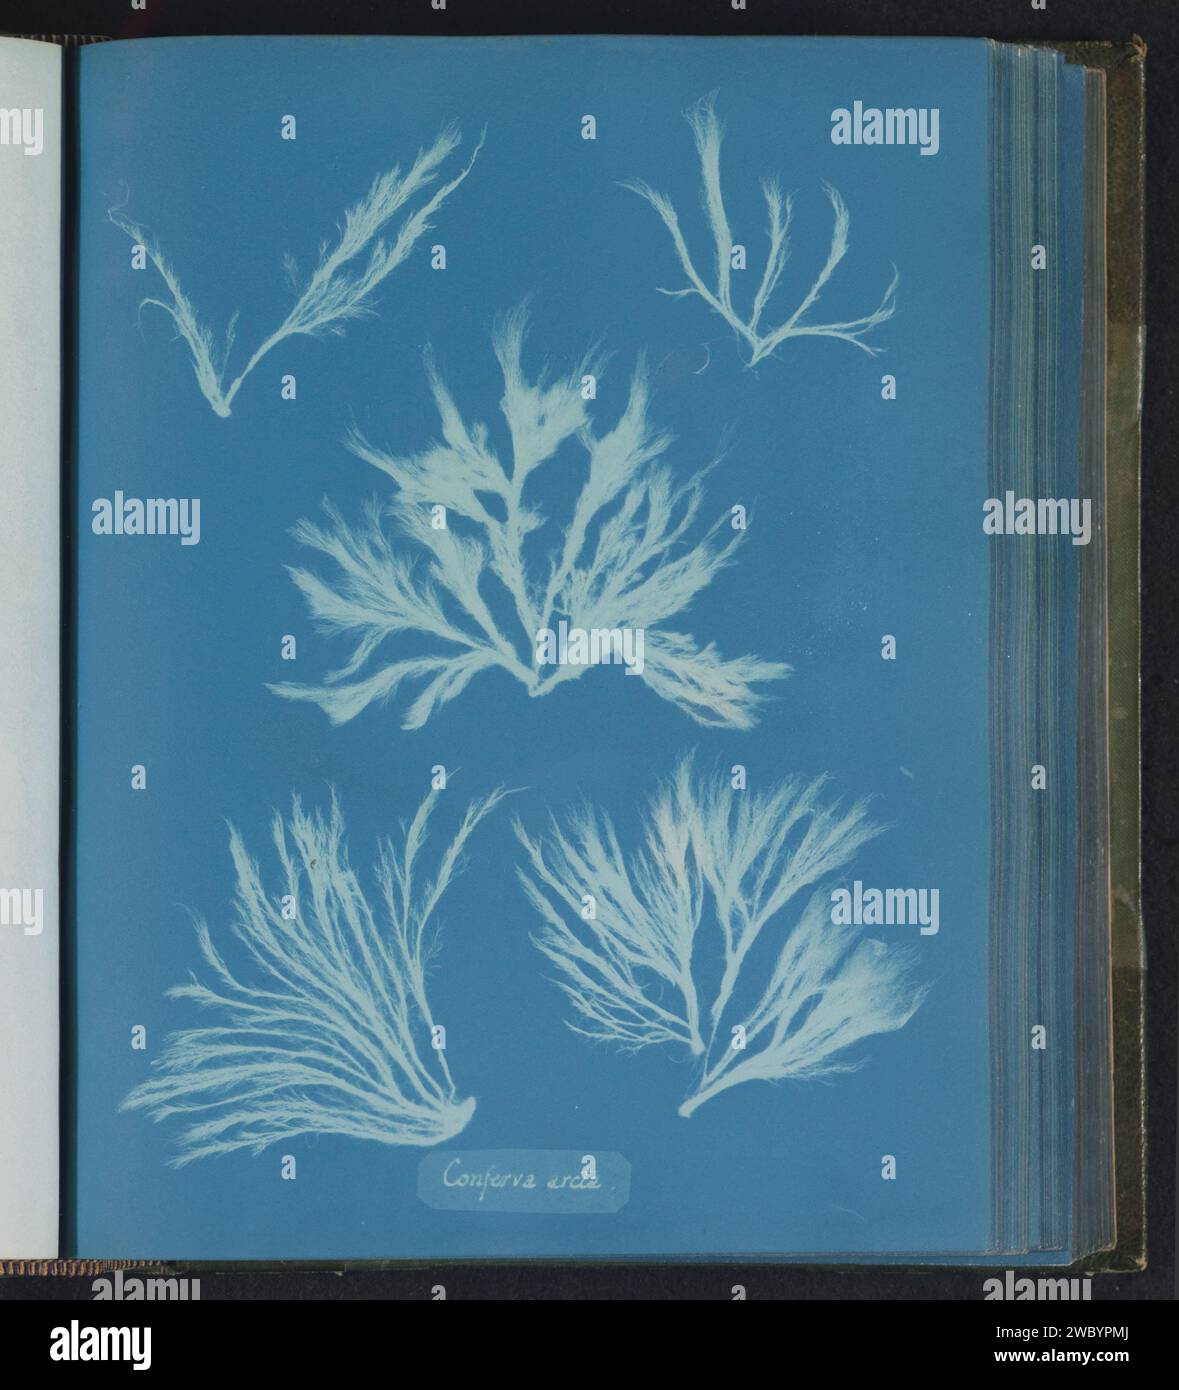 Conferva Arcta, Anna Atkins, c. 1843 - c. 1853 photograph  United Kingdom photographic support cyanotype algae, seaweed Stock Photo